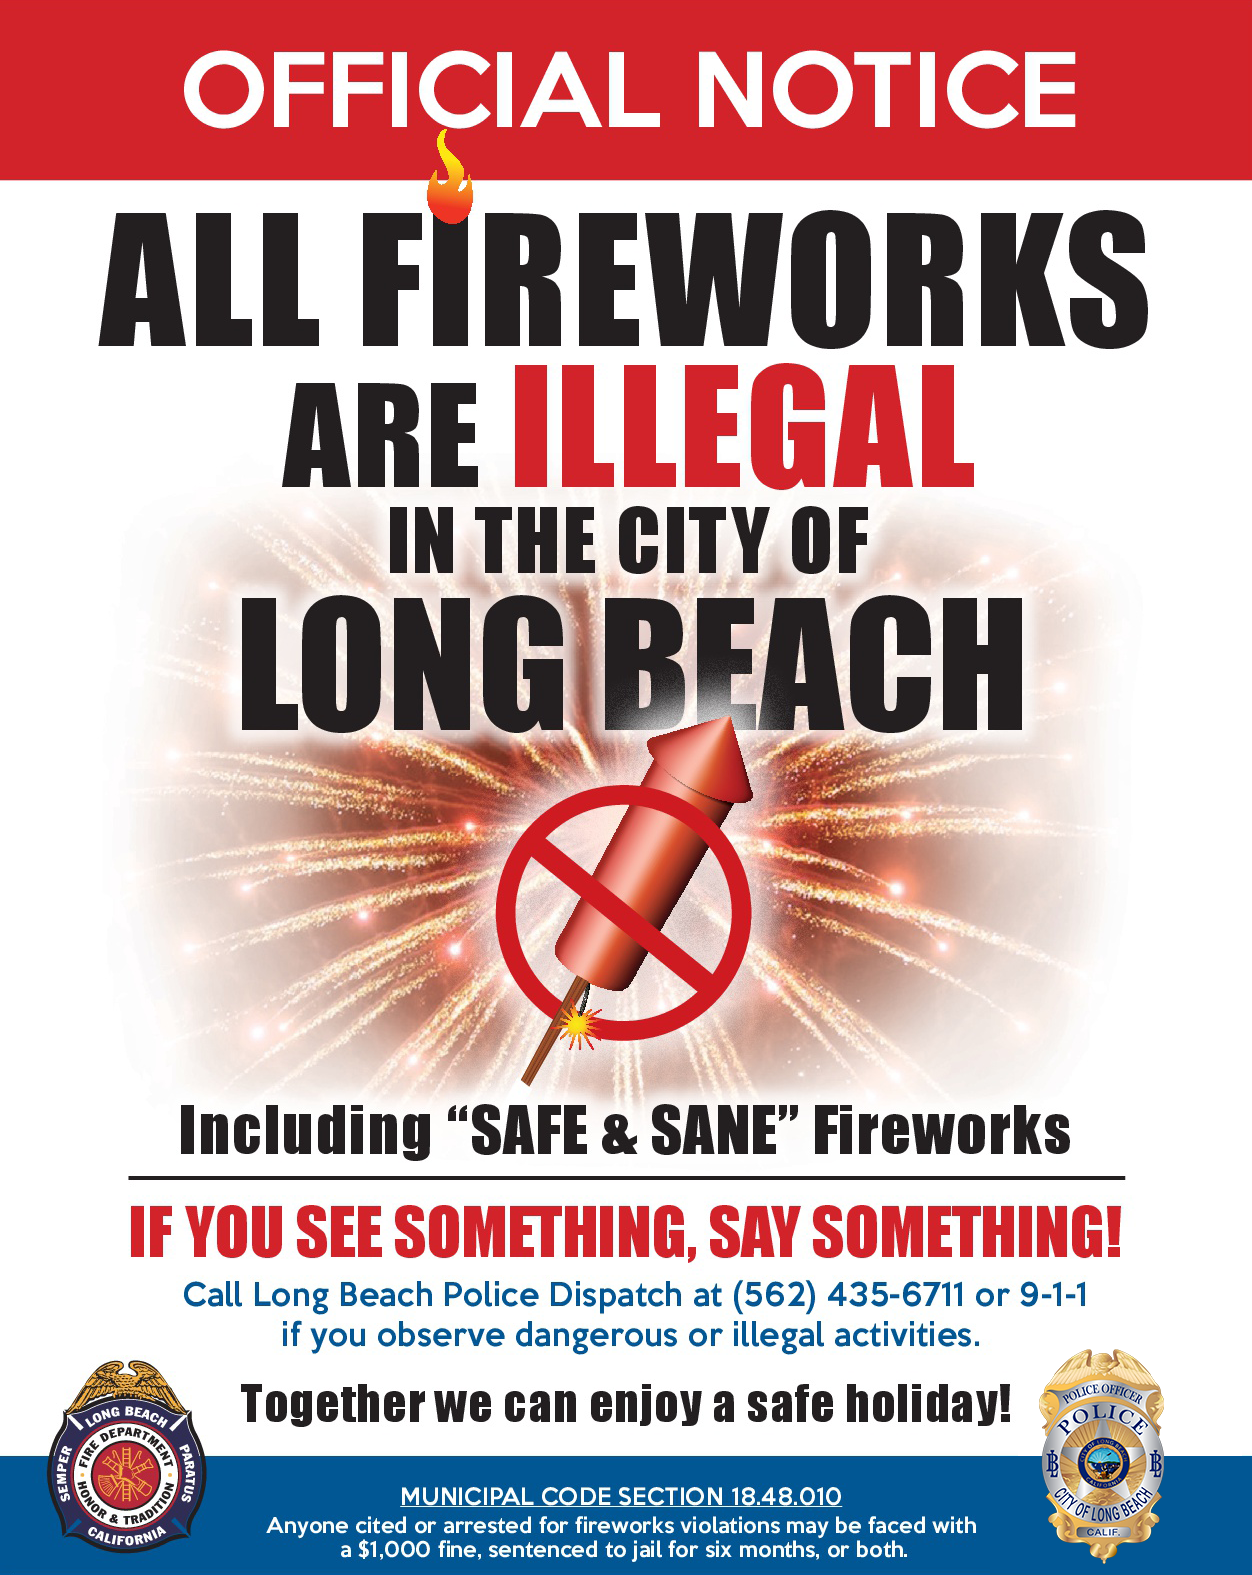 Fireworks illegal in LBC